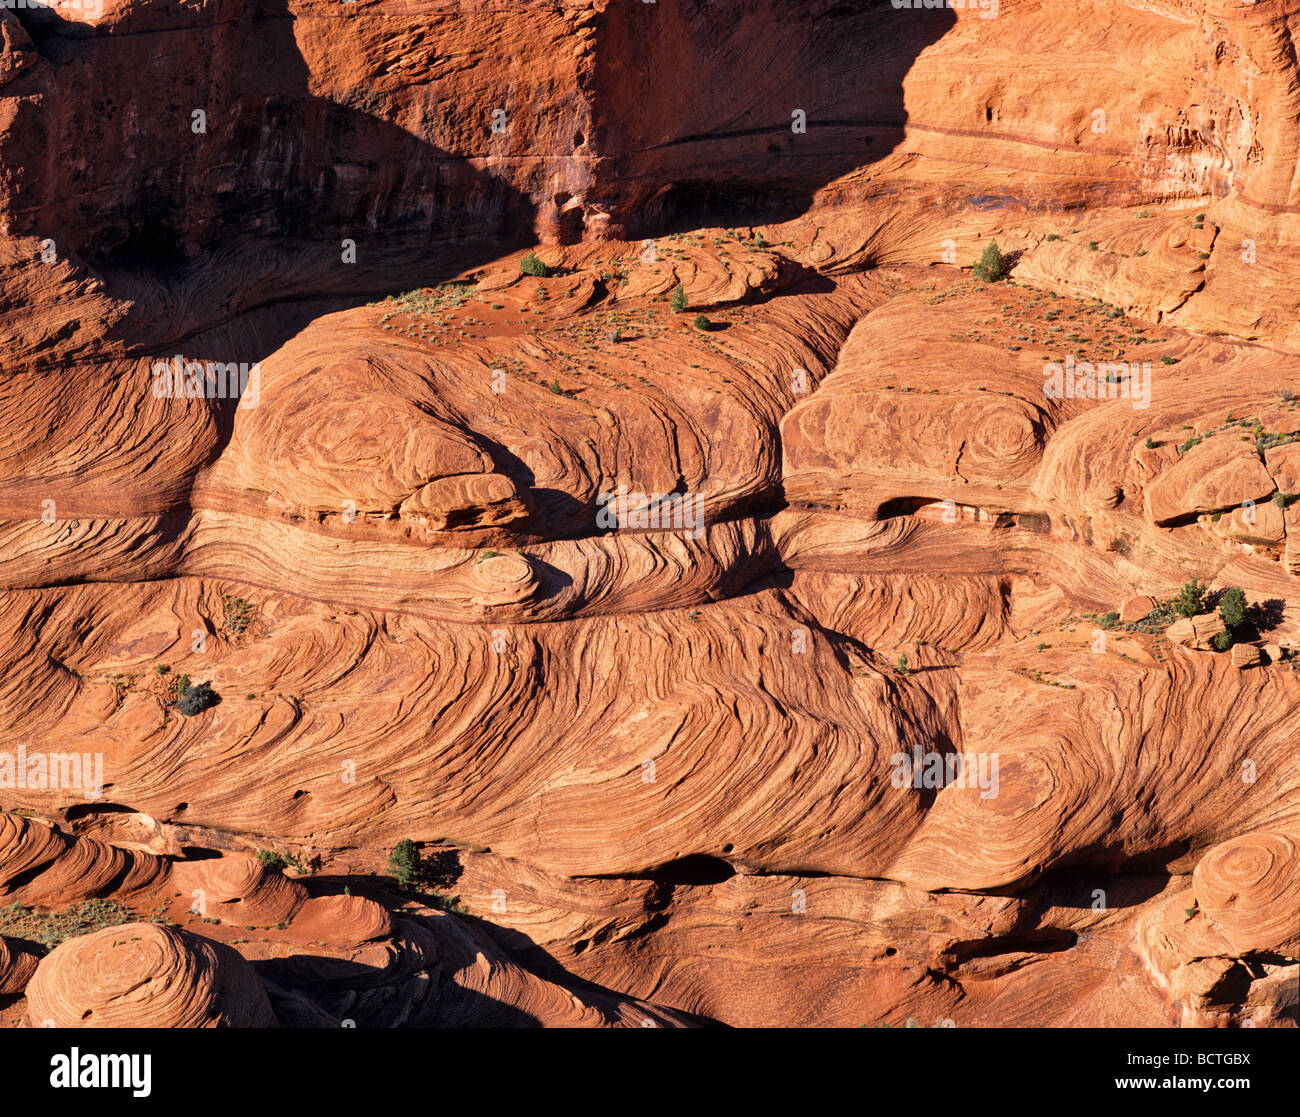 Canyon de Chelly National Monument, rock formations, Arizona, USA Stock Photo